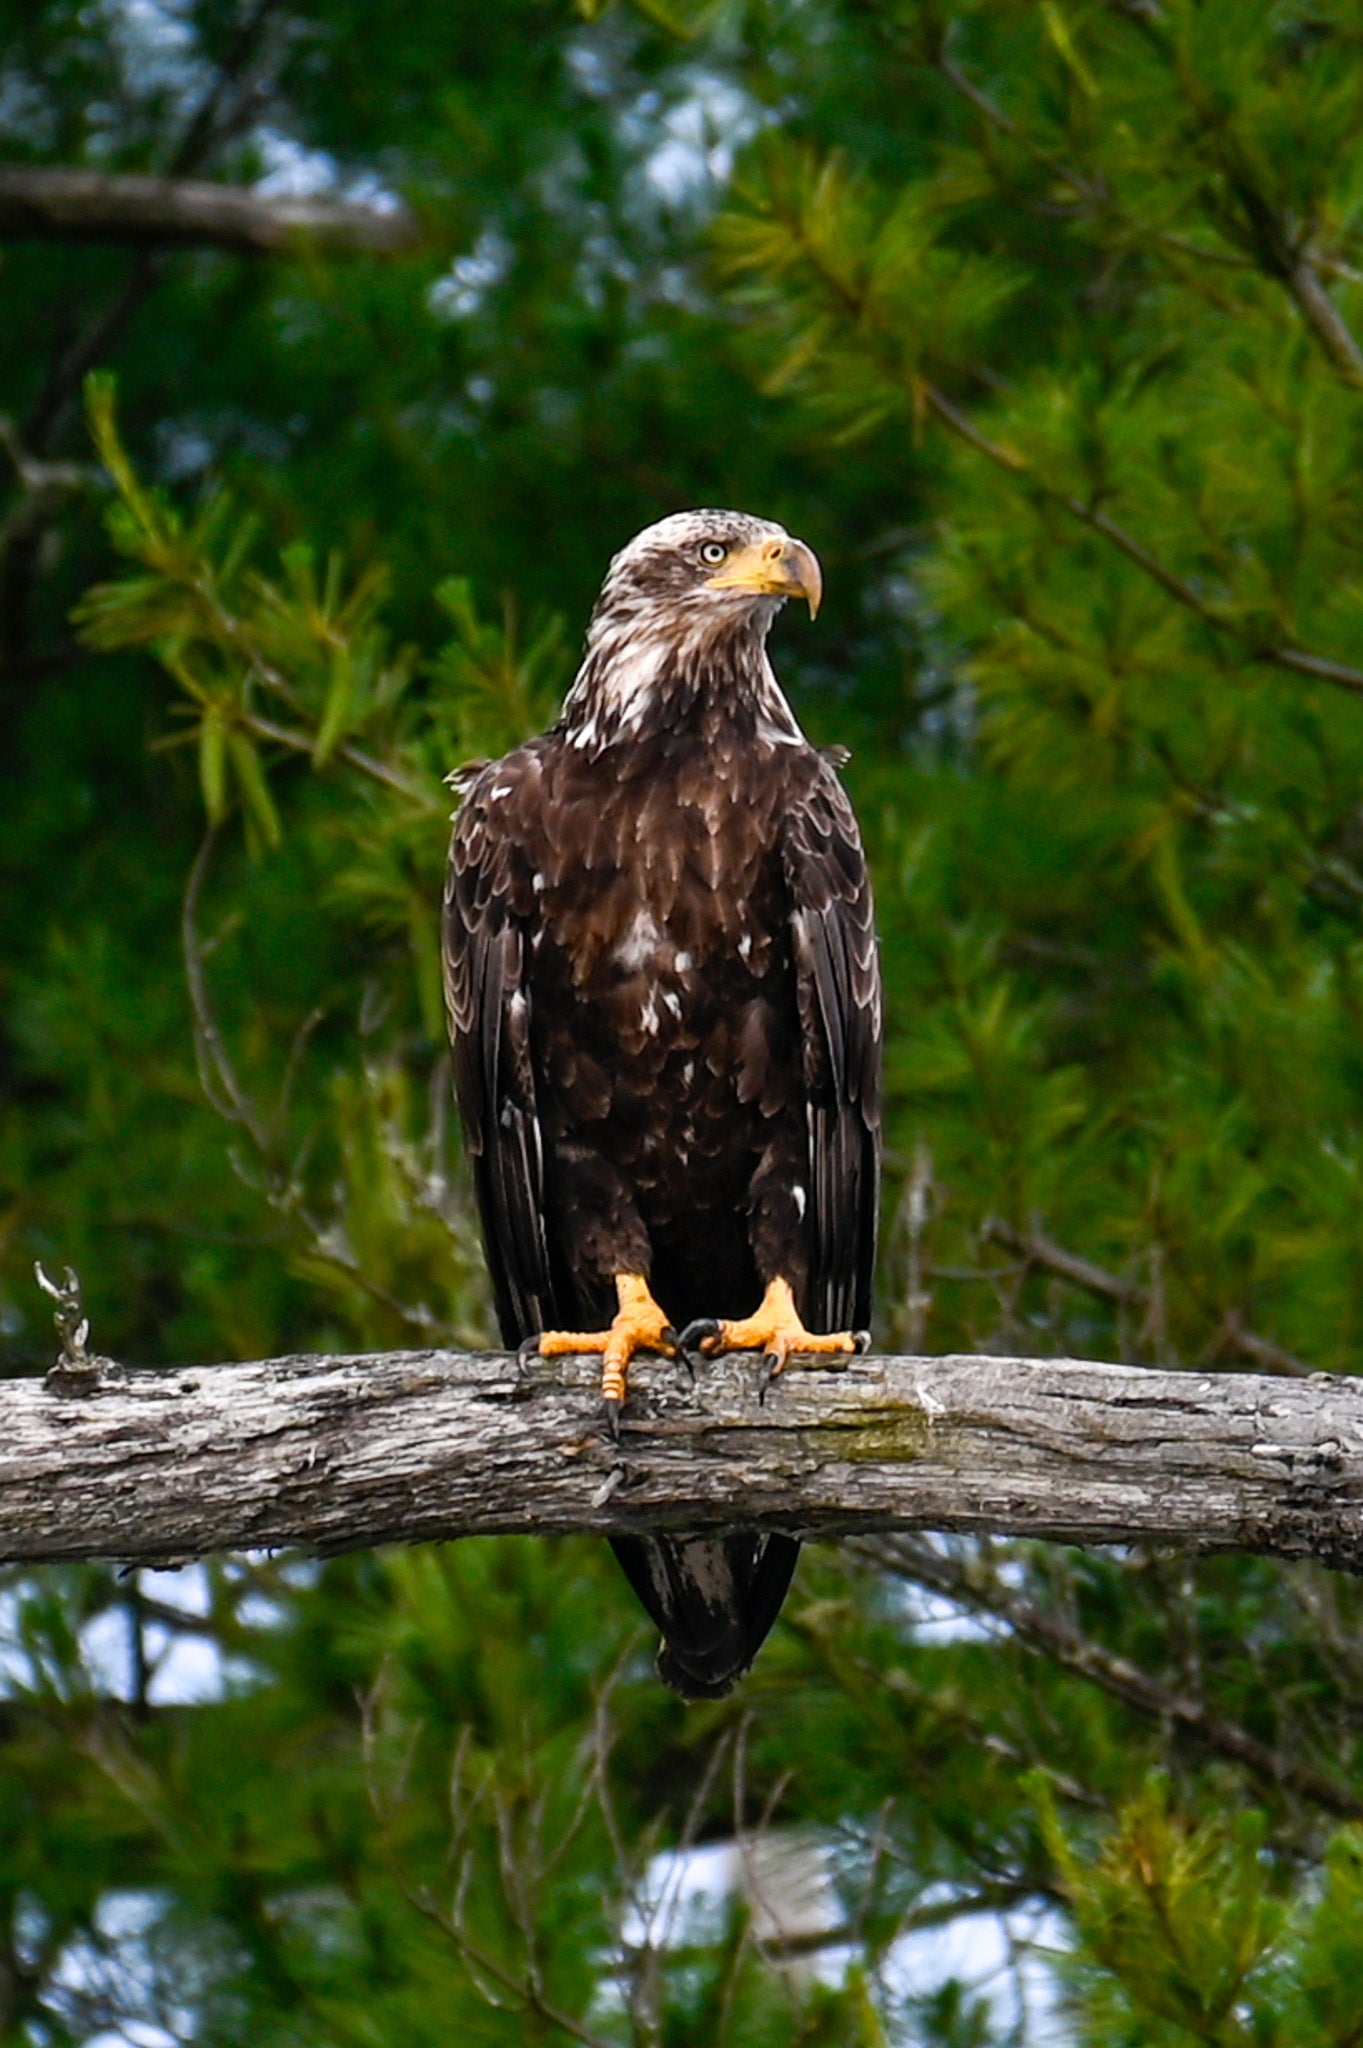 Juvenile Eagle, Adirondack Mountains